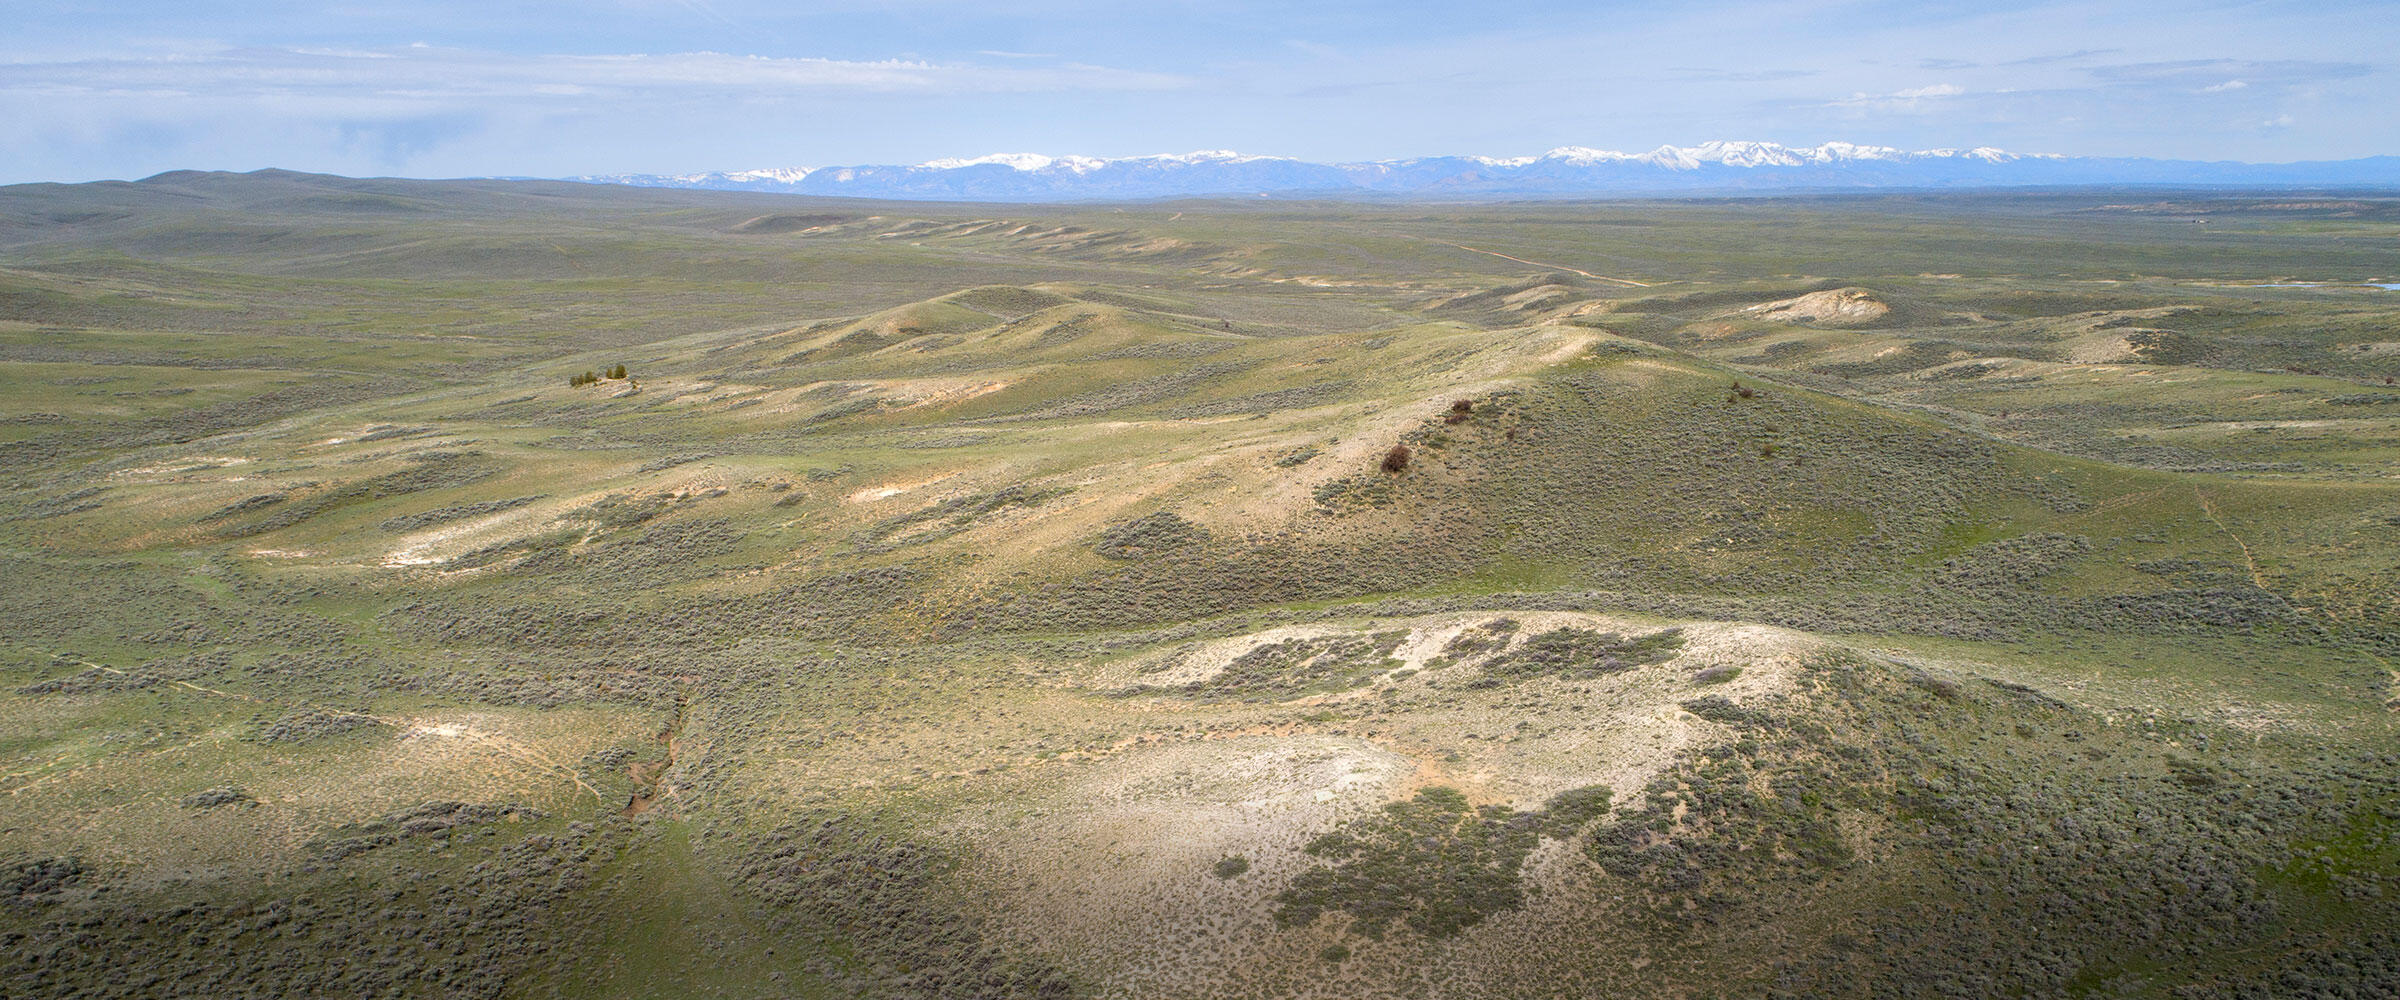 Aerial view of sagebrush steppe.